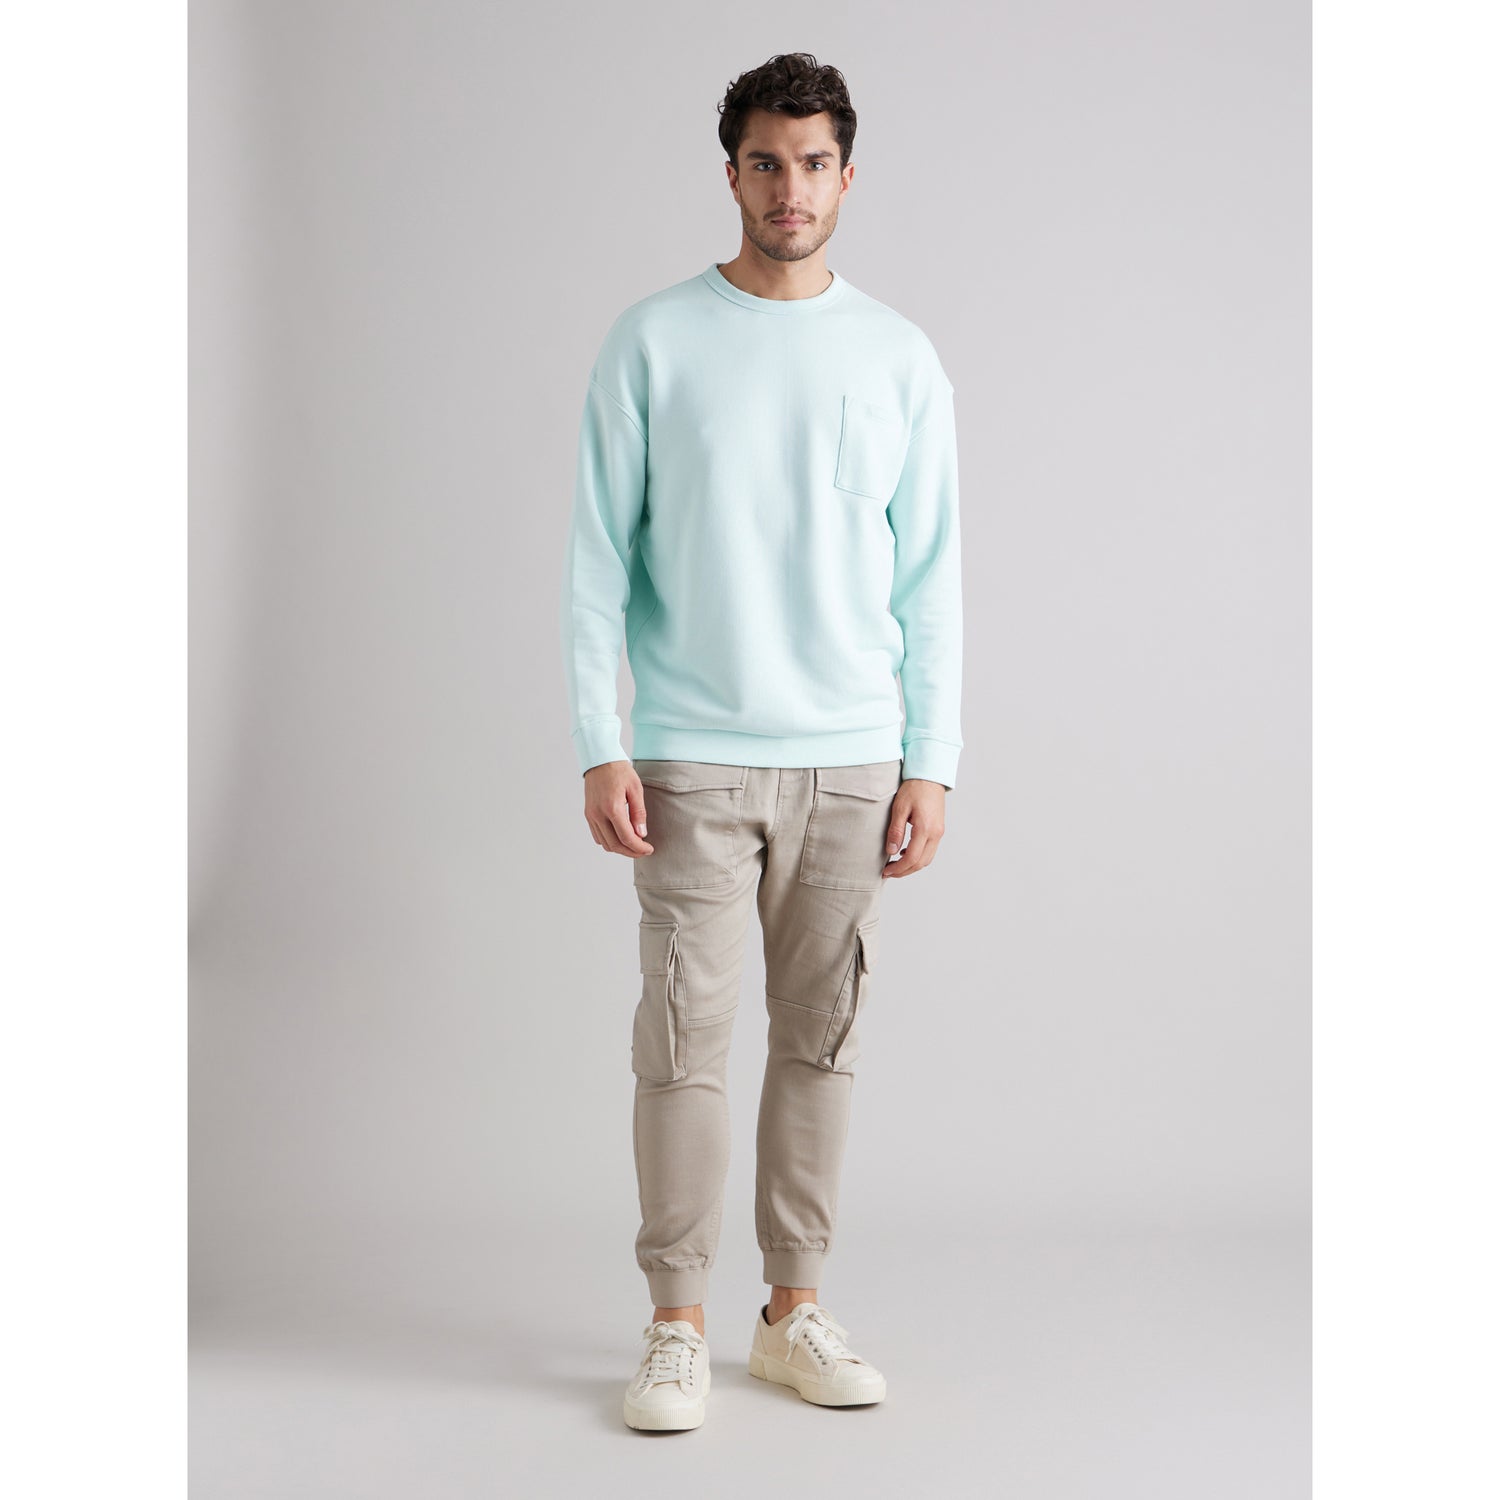 Light Blue Solid Round Neck Cotton Sweatshirt (BESWEATBOX)